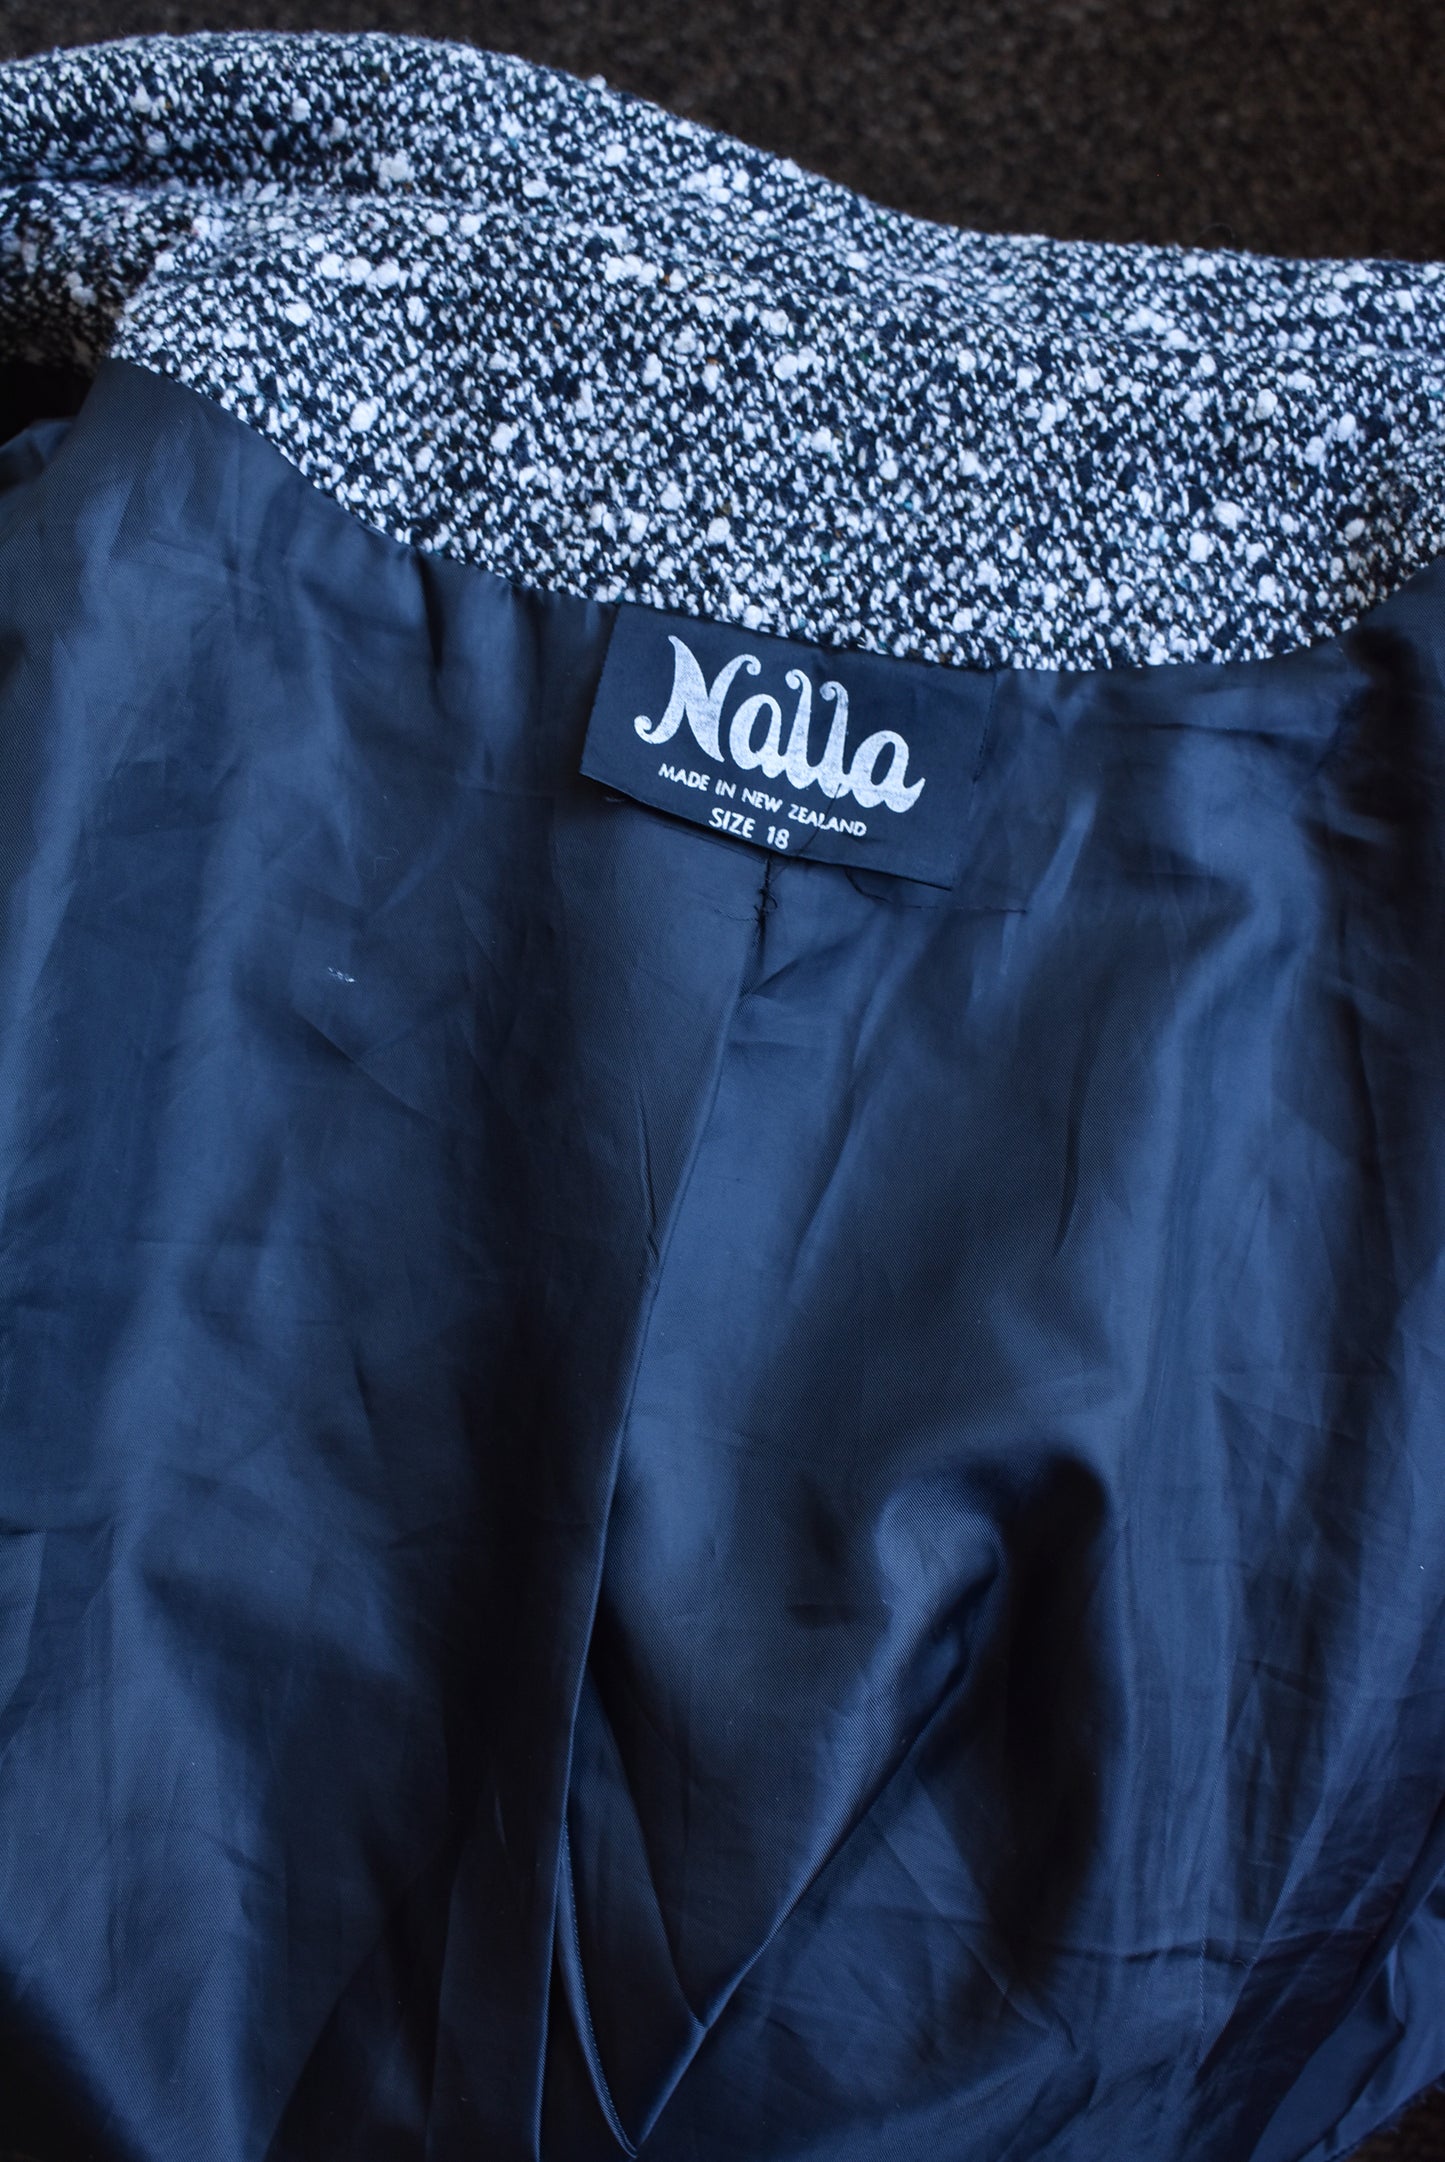 Retro Nalla grey coat, size 18